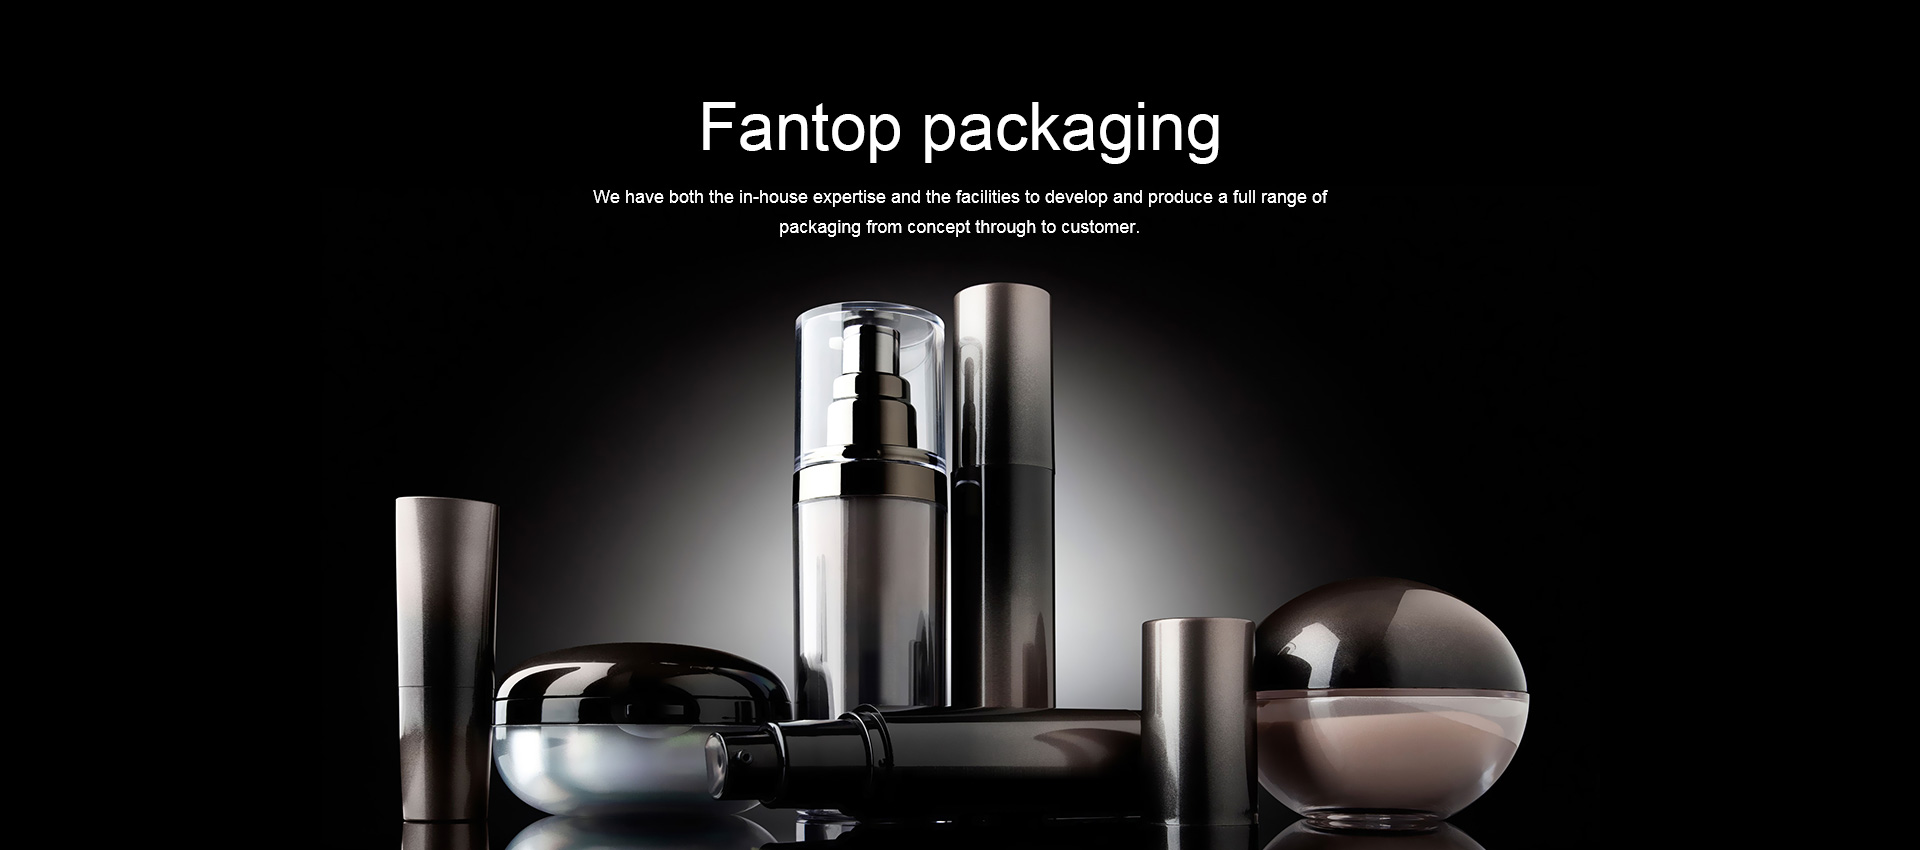 Fantop packaging